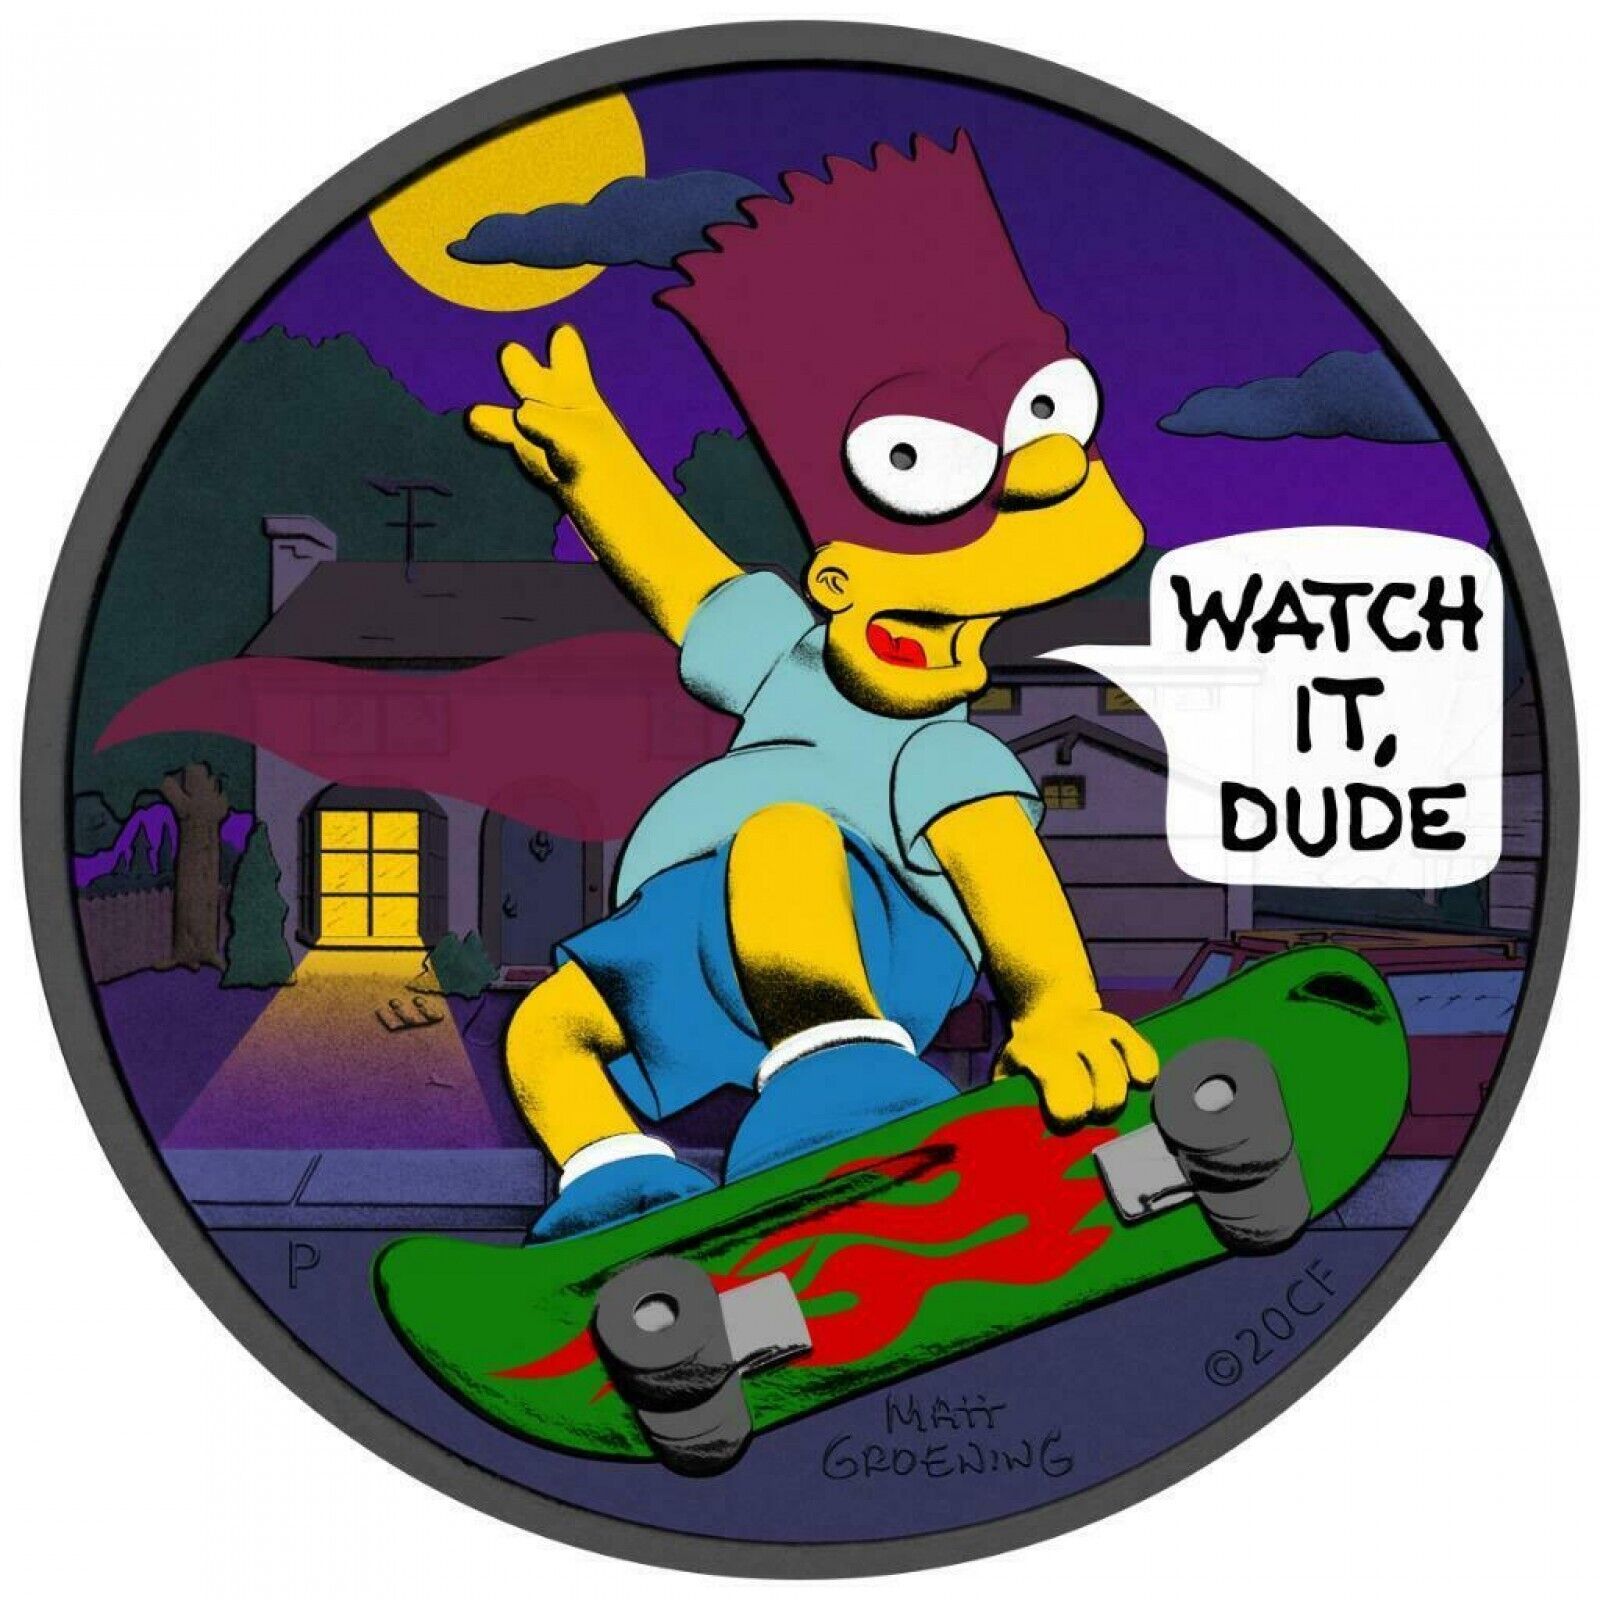 1 Oz Silver Coin 2020 Tuvalu $1 The Simpsons Bart Simpson Bartman Watch it Dude-classypw.com-1